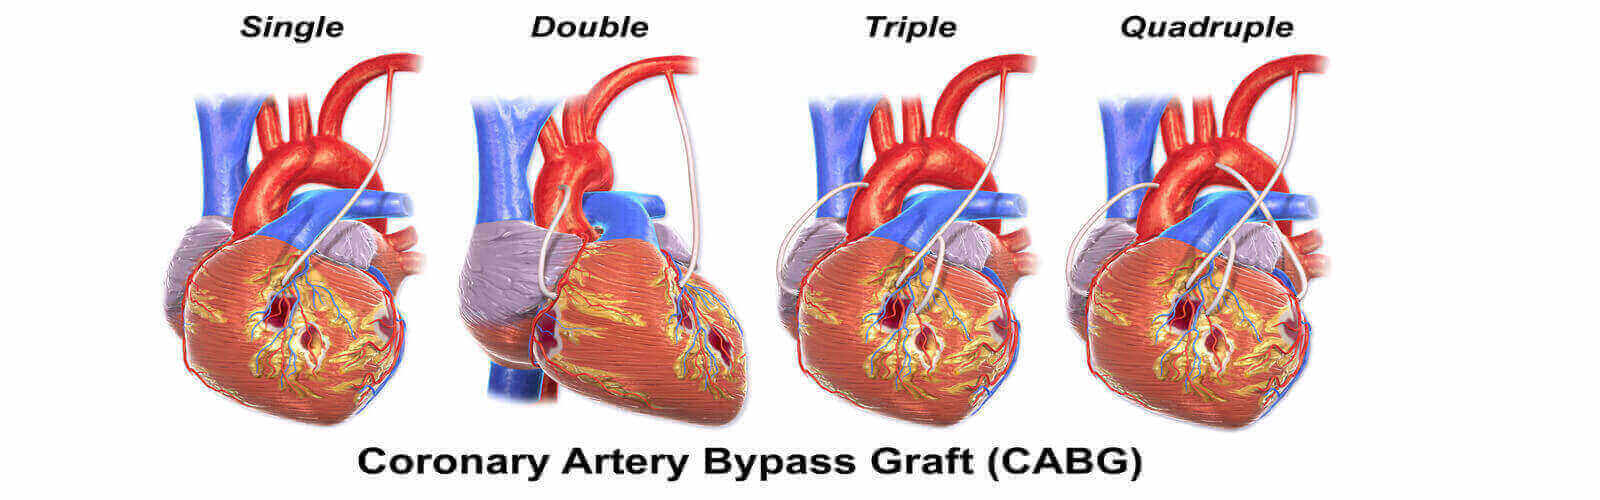 Coronary Artery Bypass Graft in Brazil